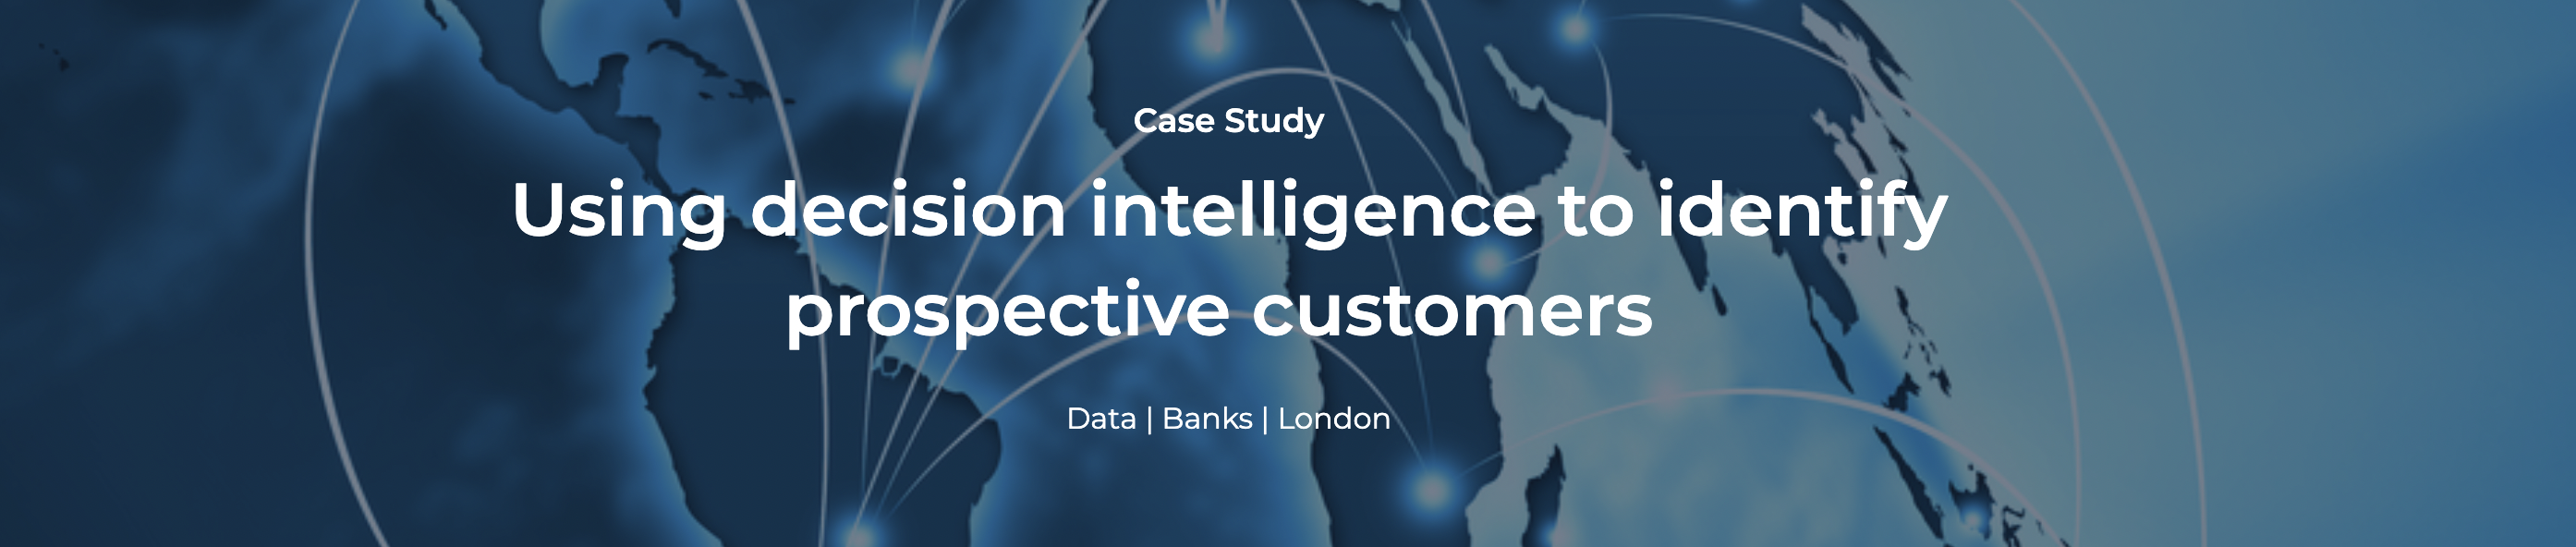 Data & Banks Case Study: Using decision intelligence to identify prospective customers